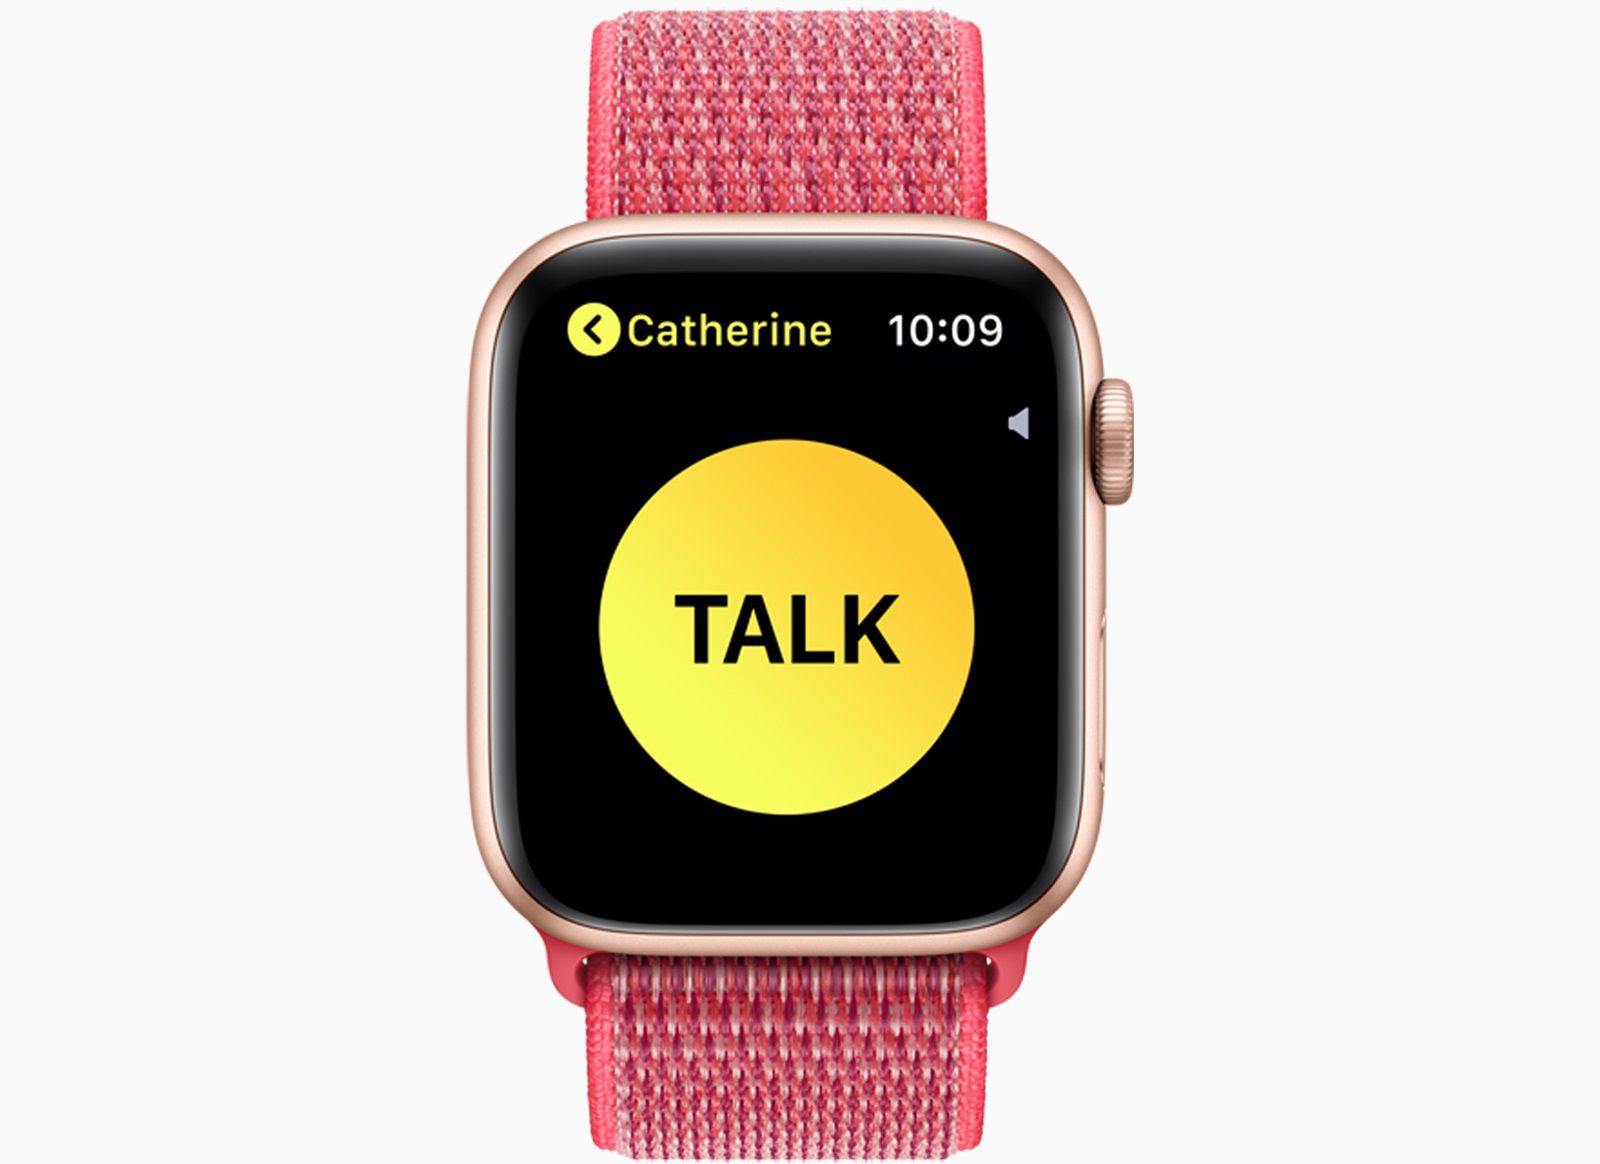 Um Apple Watch com o aplicativo walkie-talkie na tela